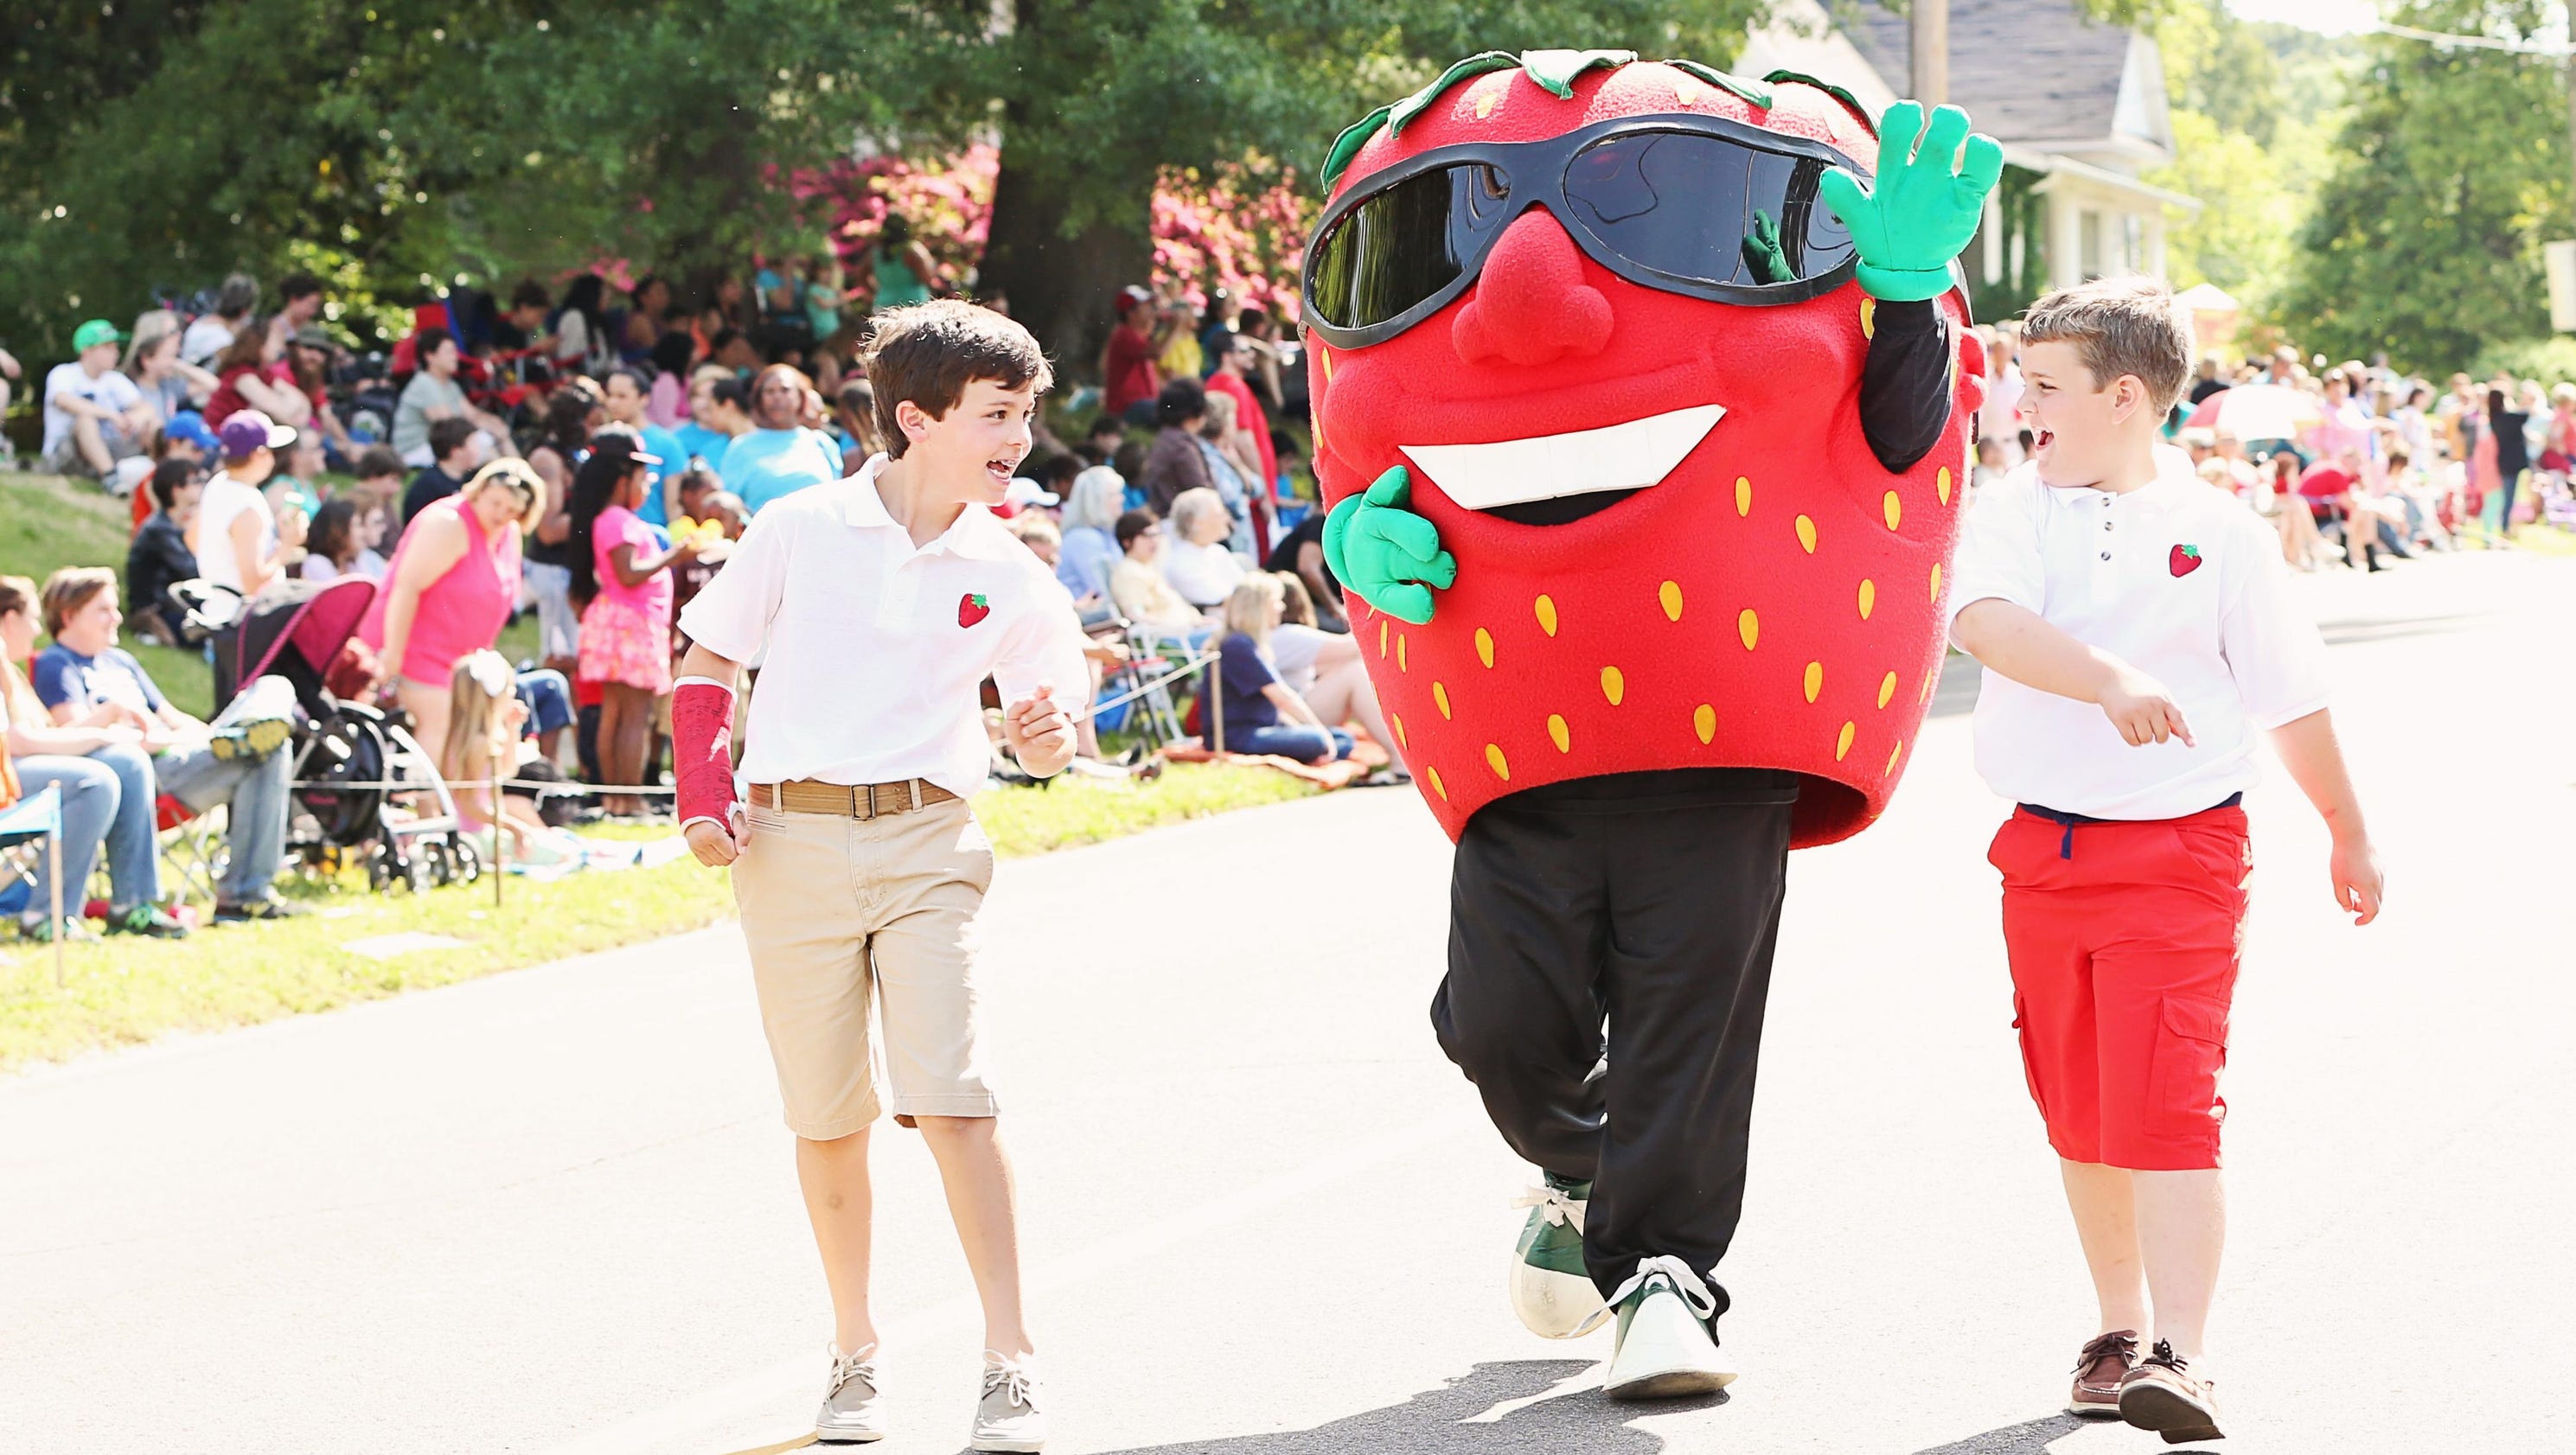 Strawberry Festival kicks off Sunday in Humboldt